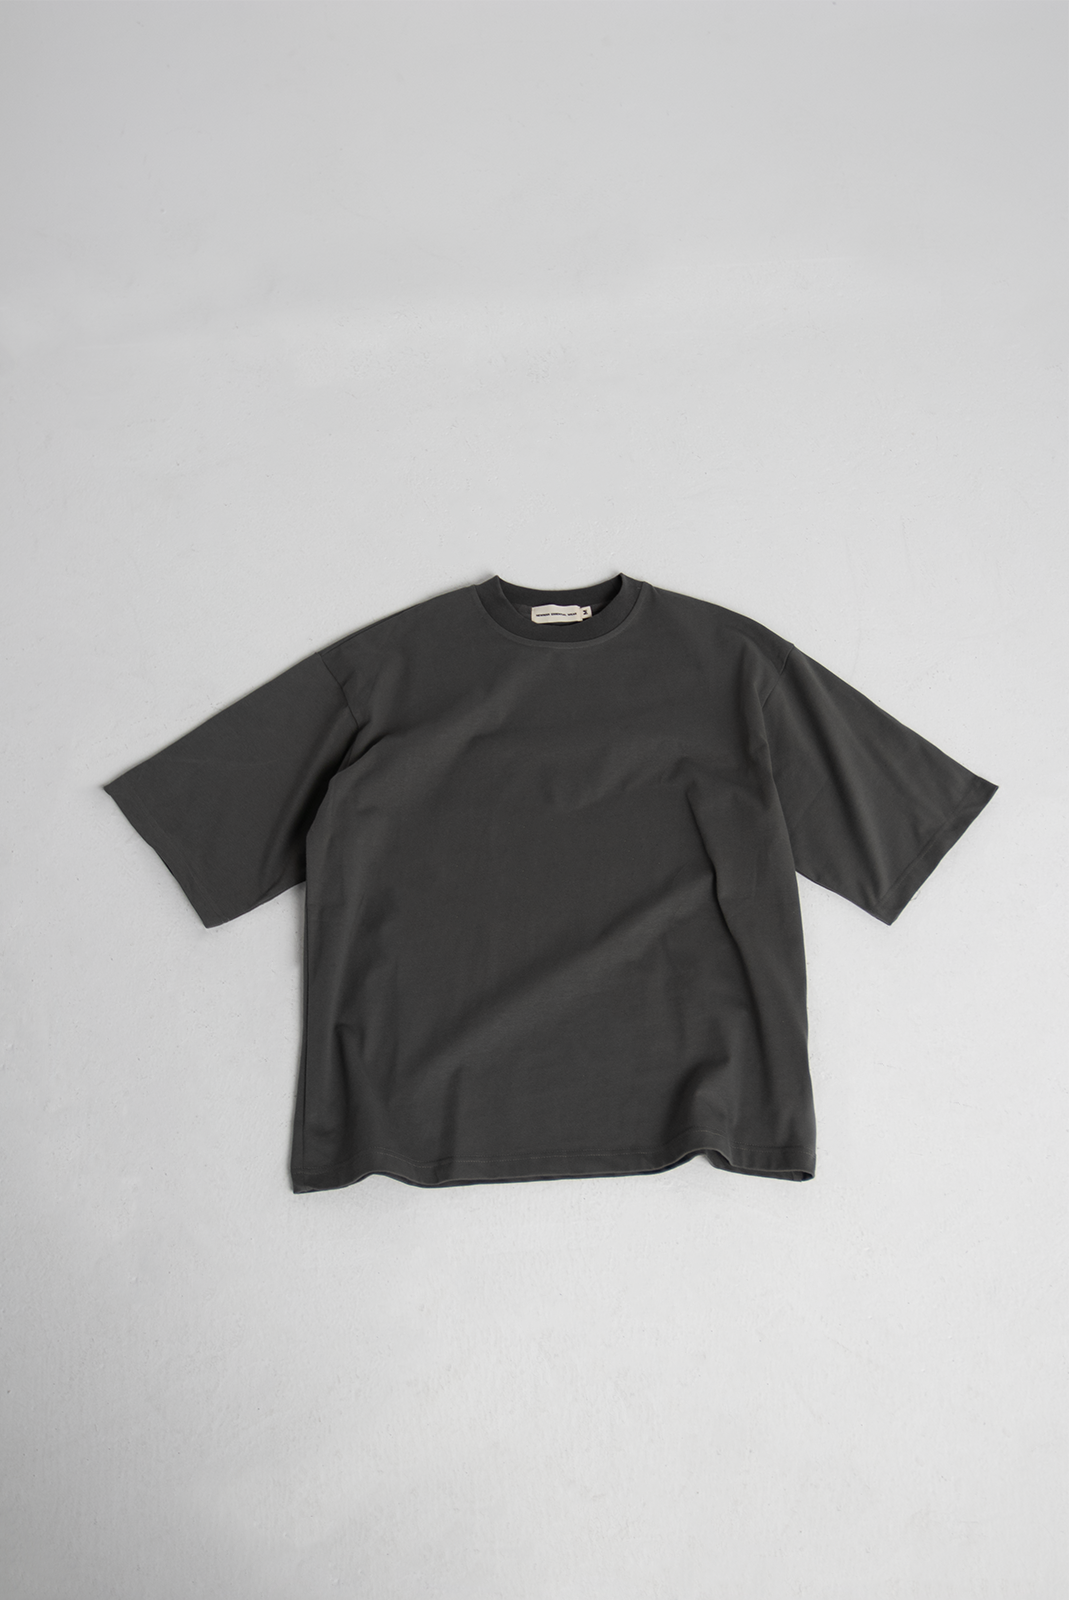 The Plains T-Shirt V2 / Charcoal Grey